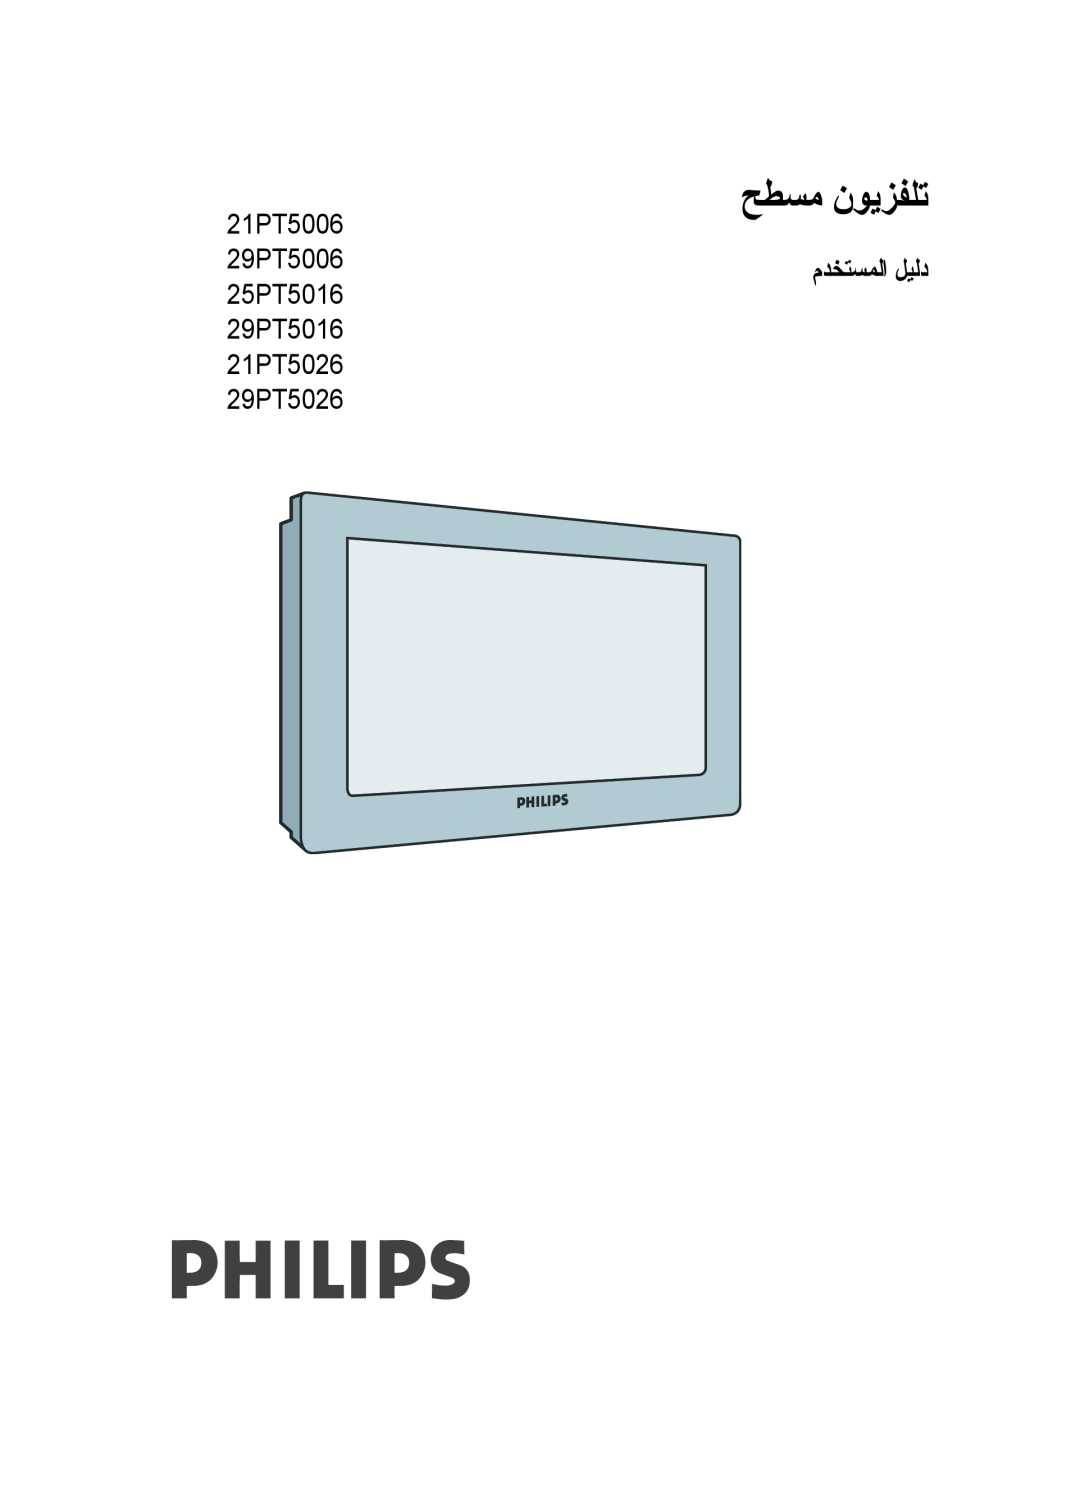 Philips manual 21PT5006, 29PT5016 21PT5026 29PT5026, ﺢﻄﺴﻣ نﻮﻳﺰﻔﻠﺗ, 29PT5006مﺪﺨﺘﺴﻤﻟا ﻞﻴﻟد 25PT5016 